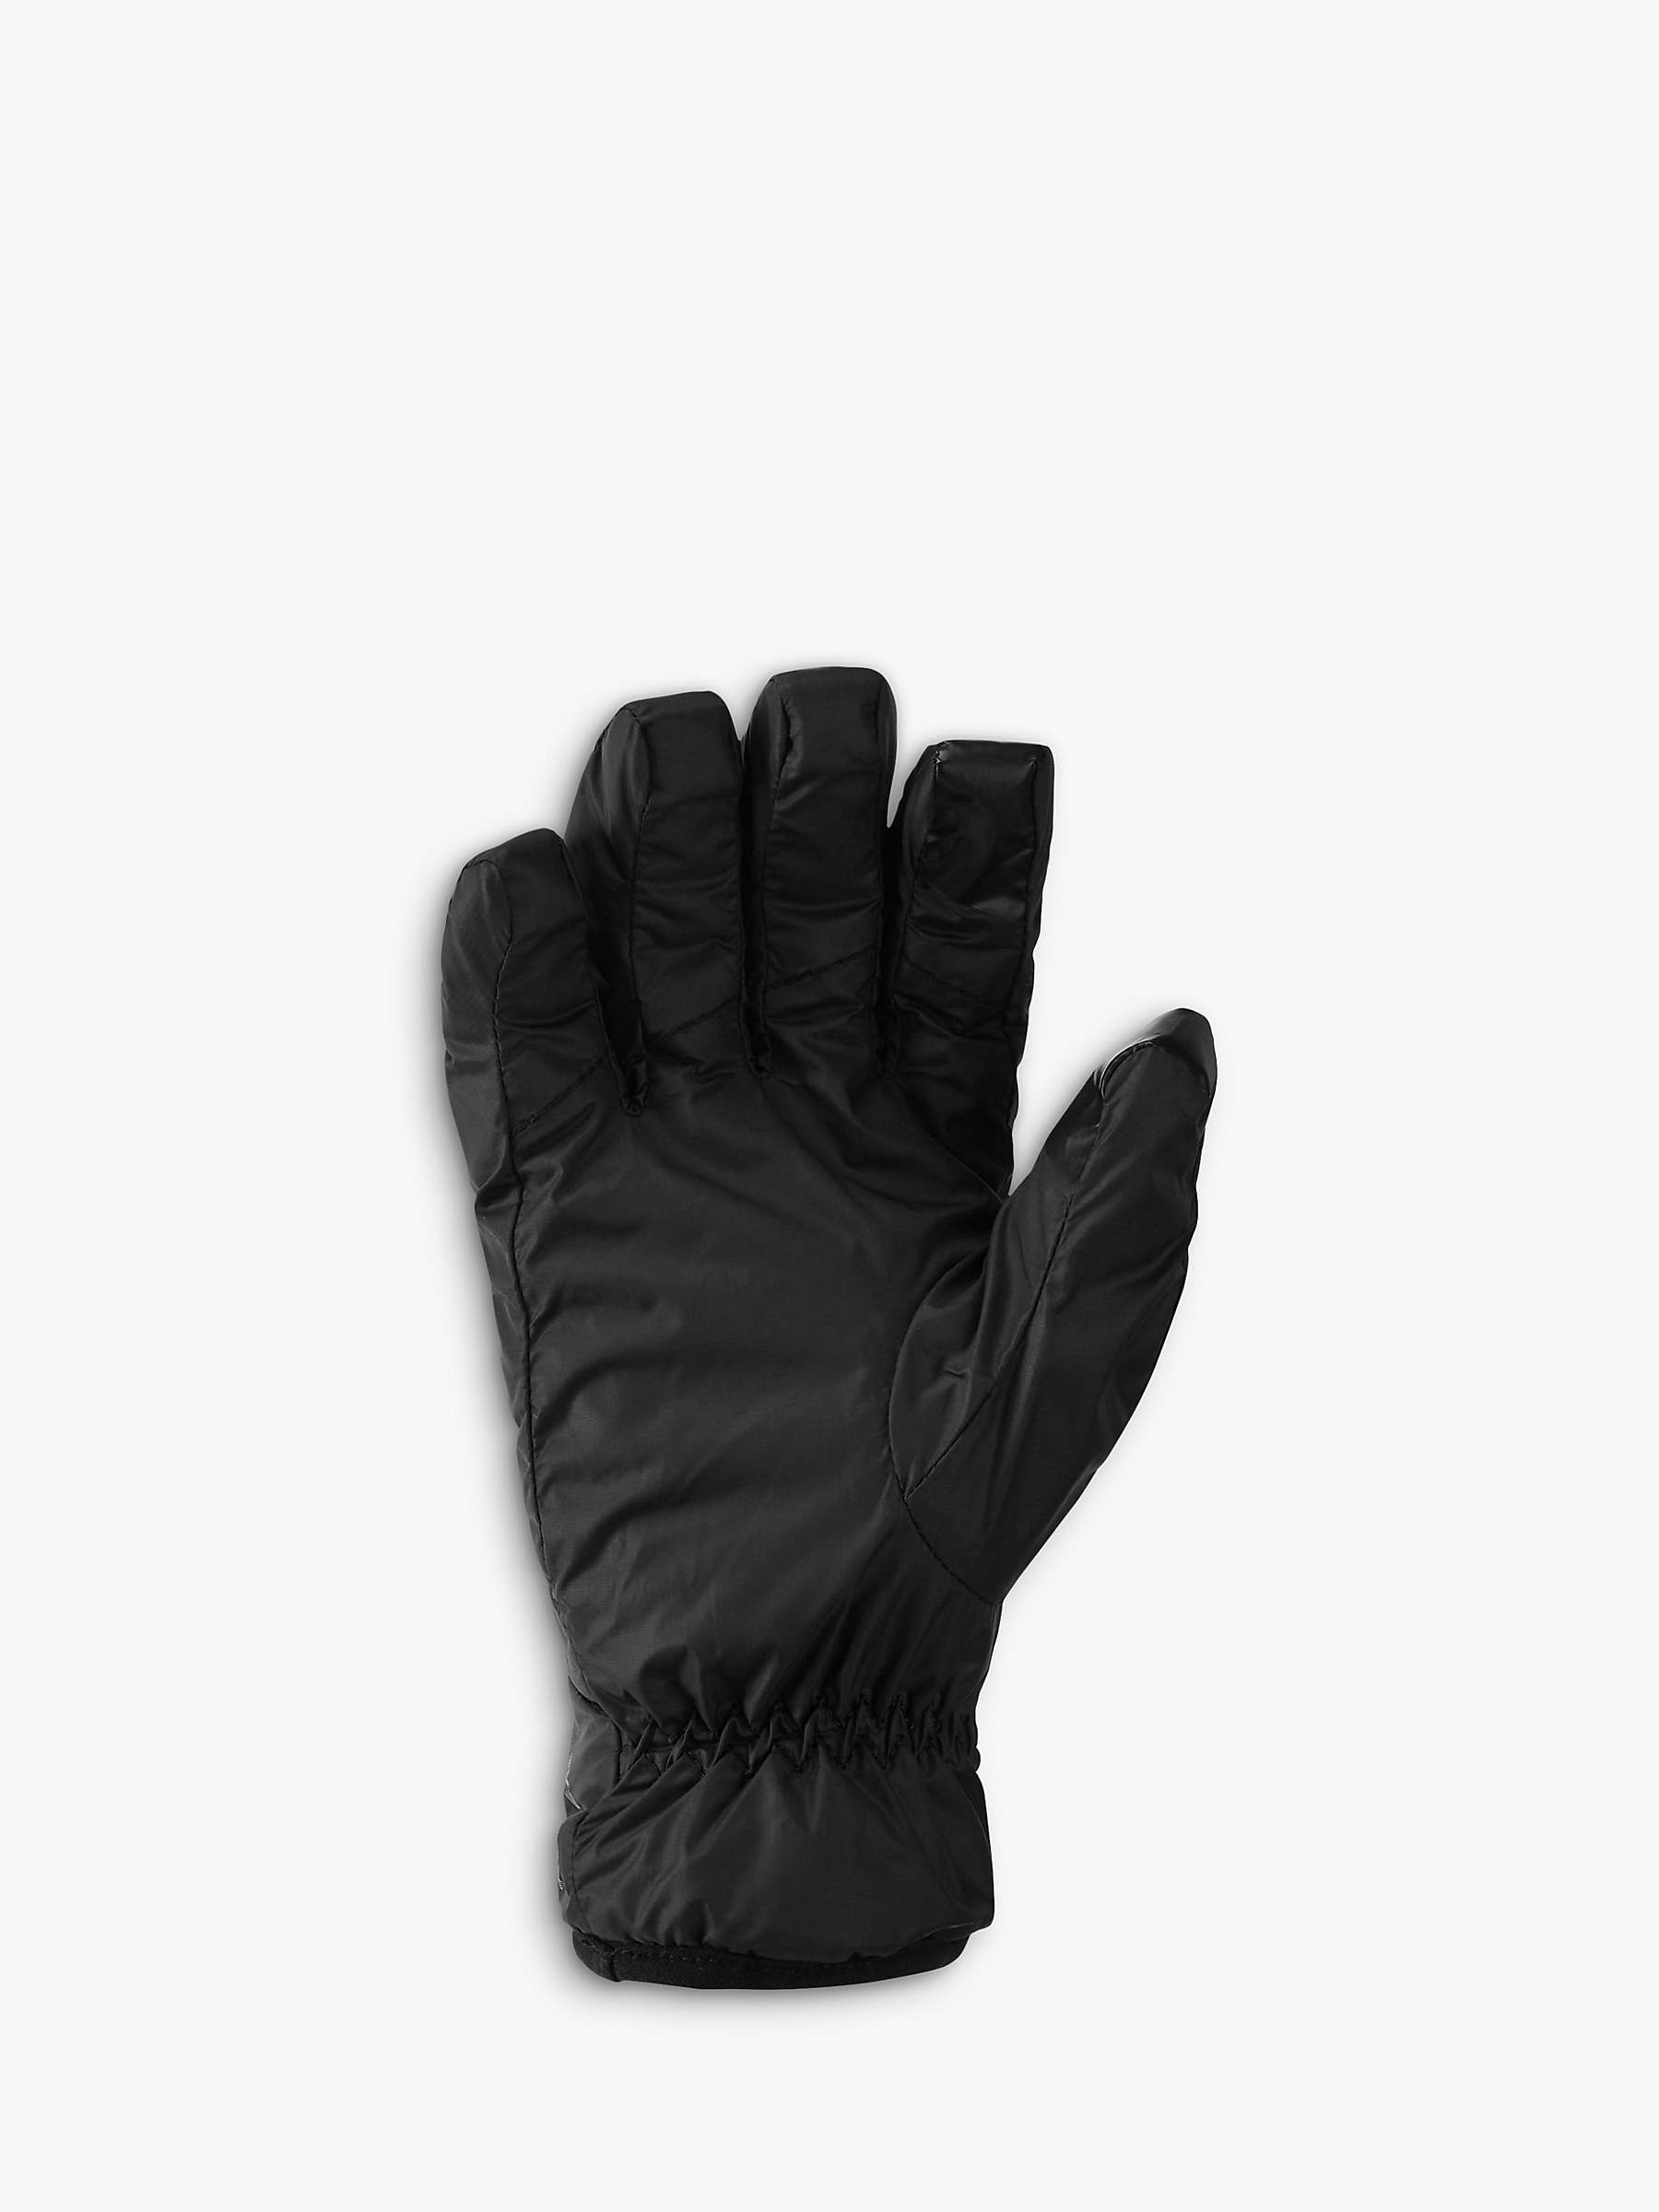 Buy Montane Men's Prism Insulated Gloves, Black Online at johnlewis.com